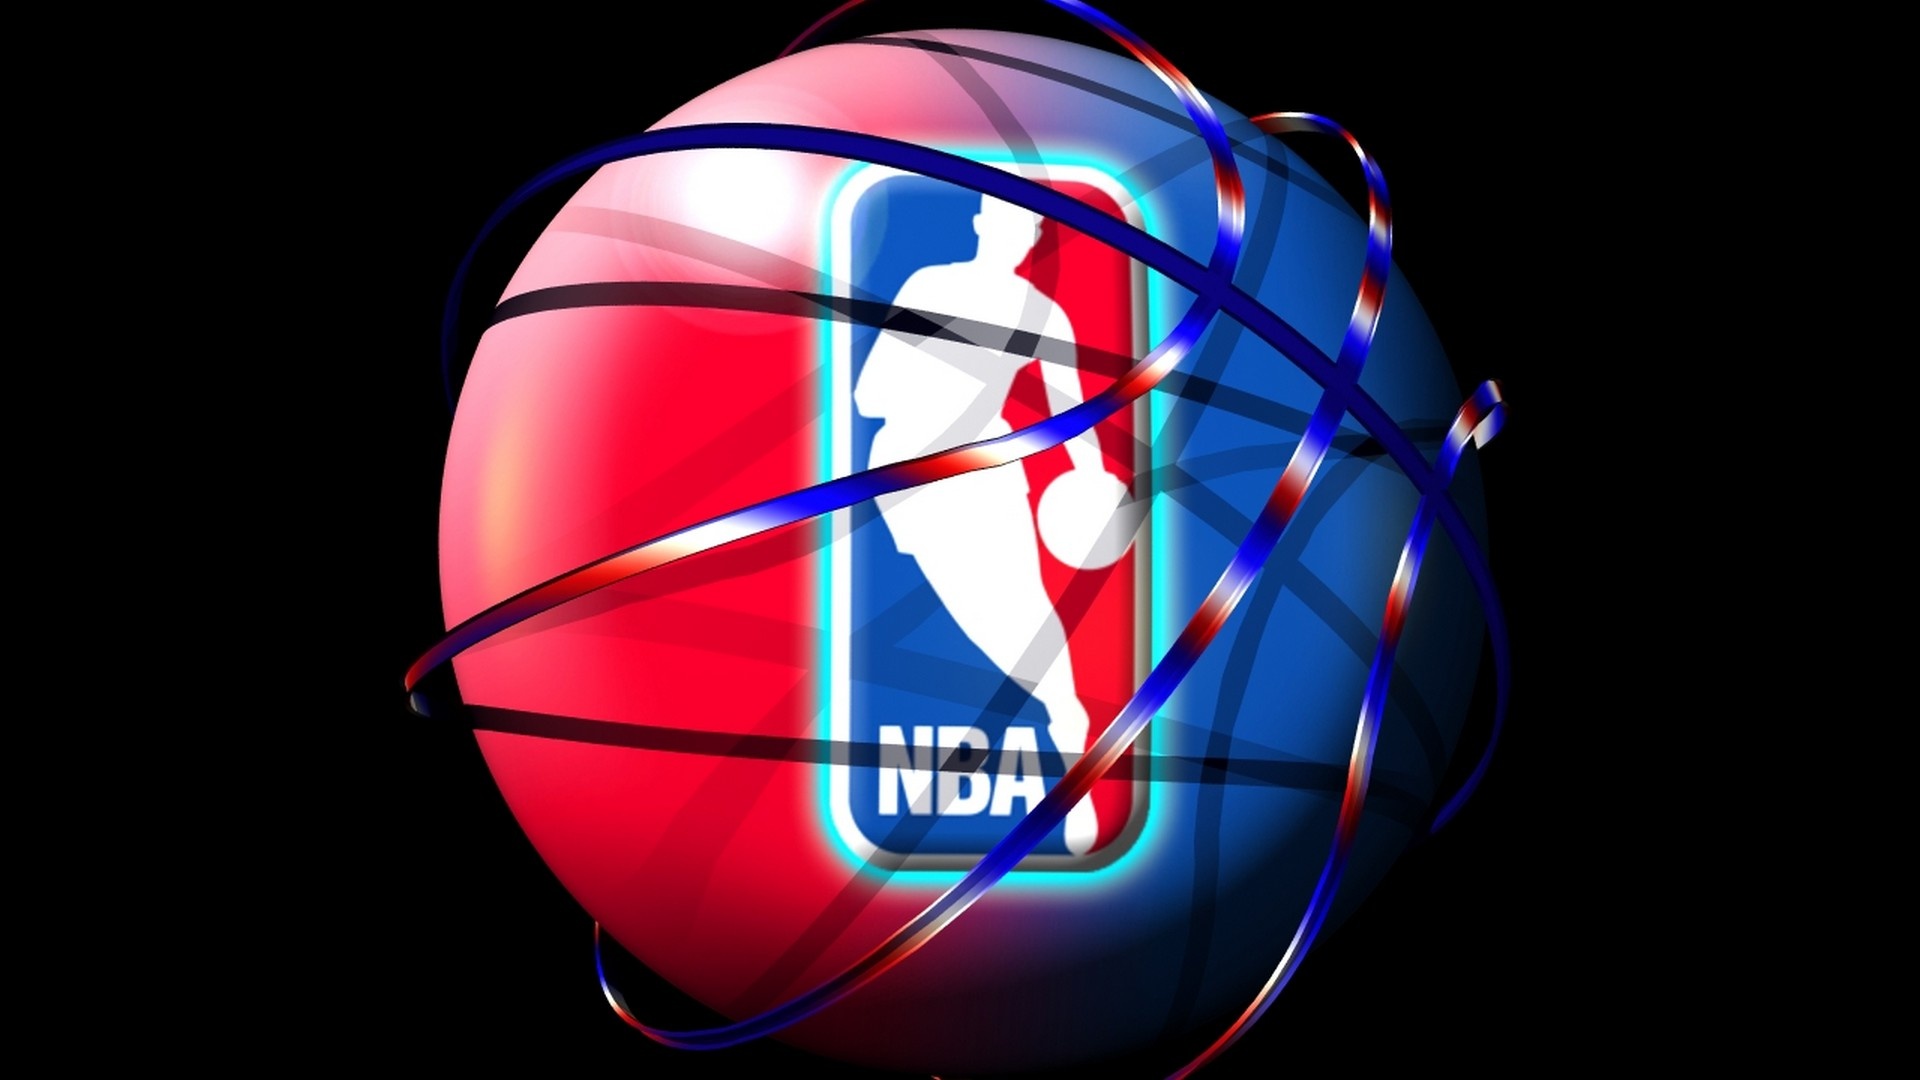 Free NBA wallpapers, Dynamic basketball art, Desktop and mobile, Vibrant visuals, 1920x1080 Full HD Desktop